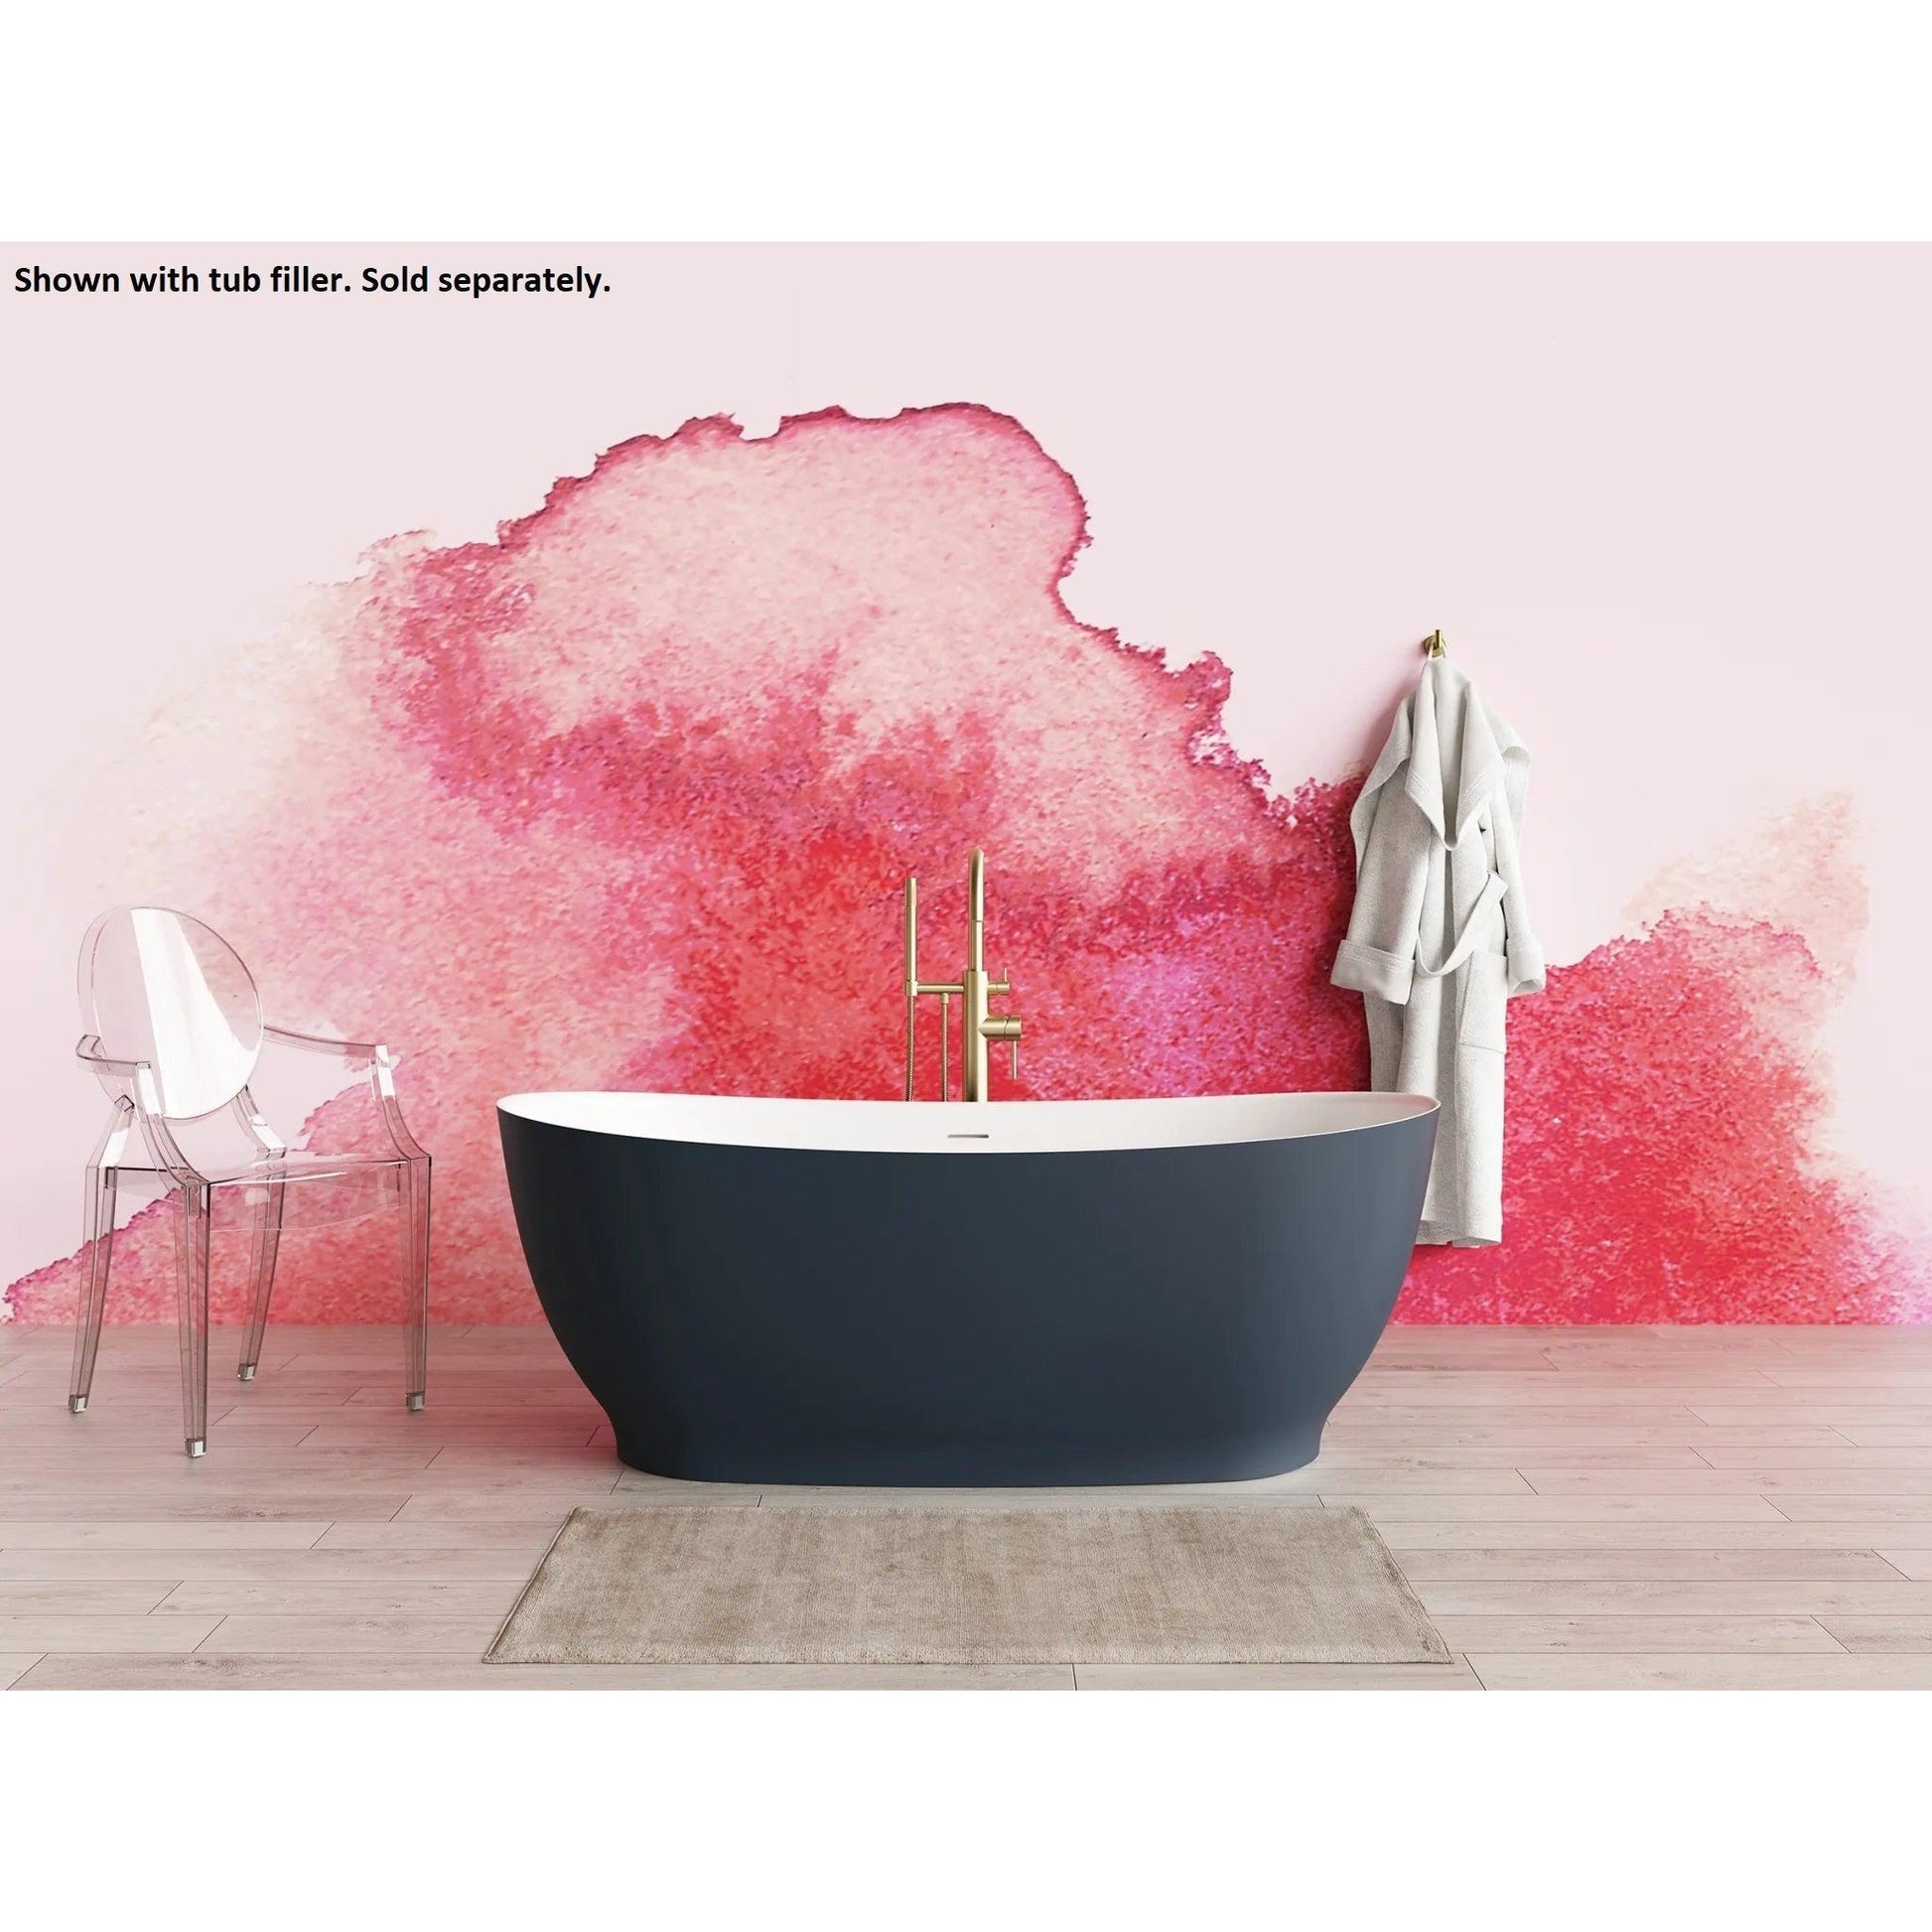 LaToscana Eco-Lapistone Vittoria 59" Midnight Blue Matte Freestanding Solid Surface Soaking Bathtub